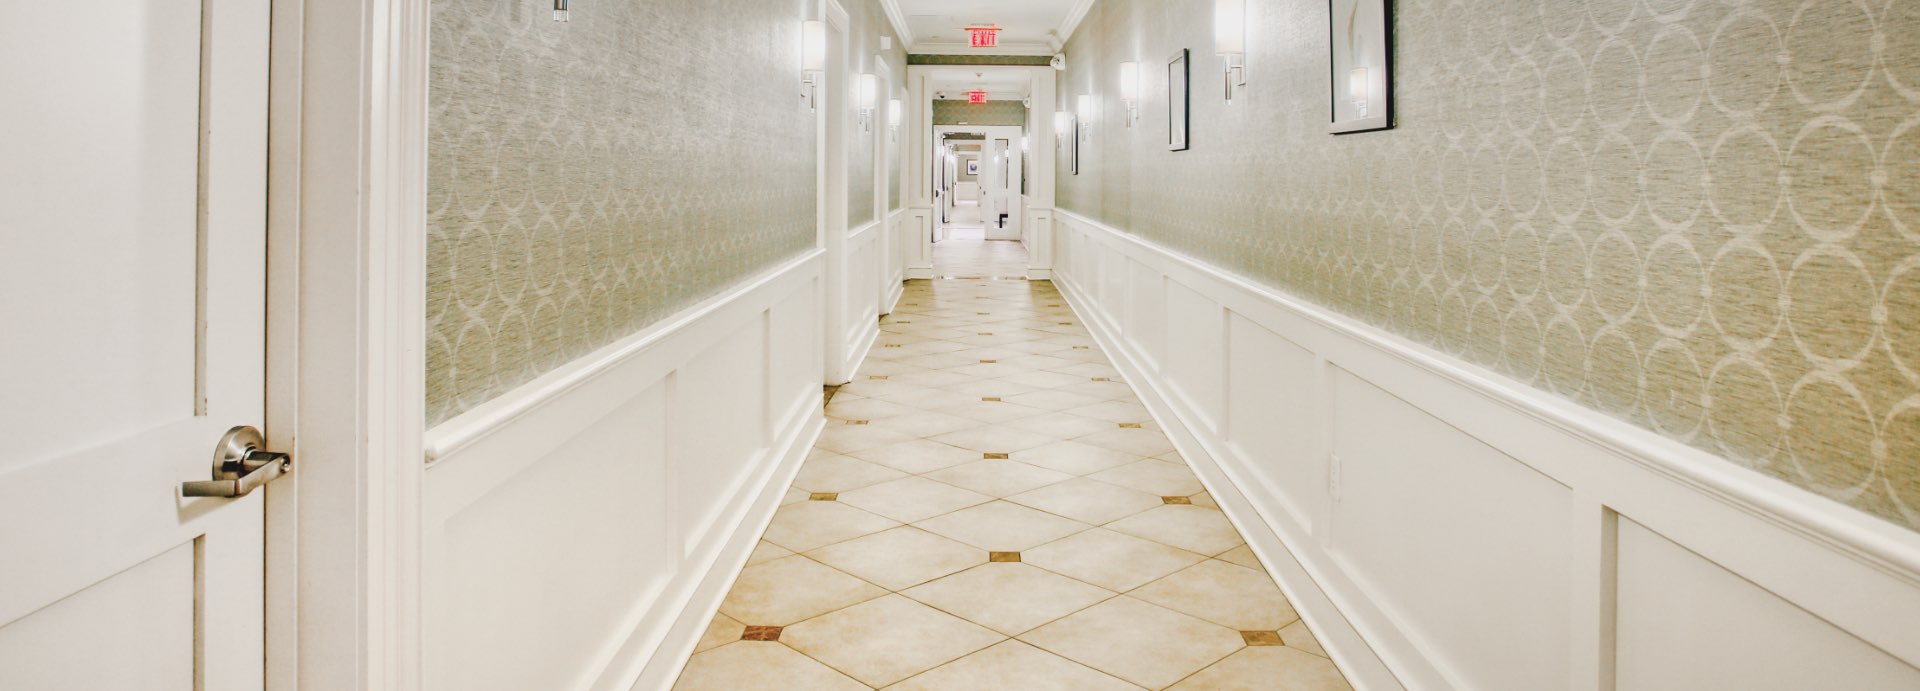 Evolve Orlando hallway